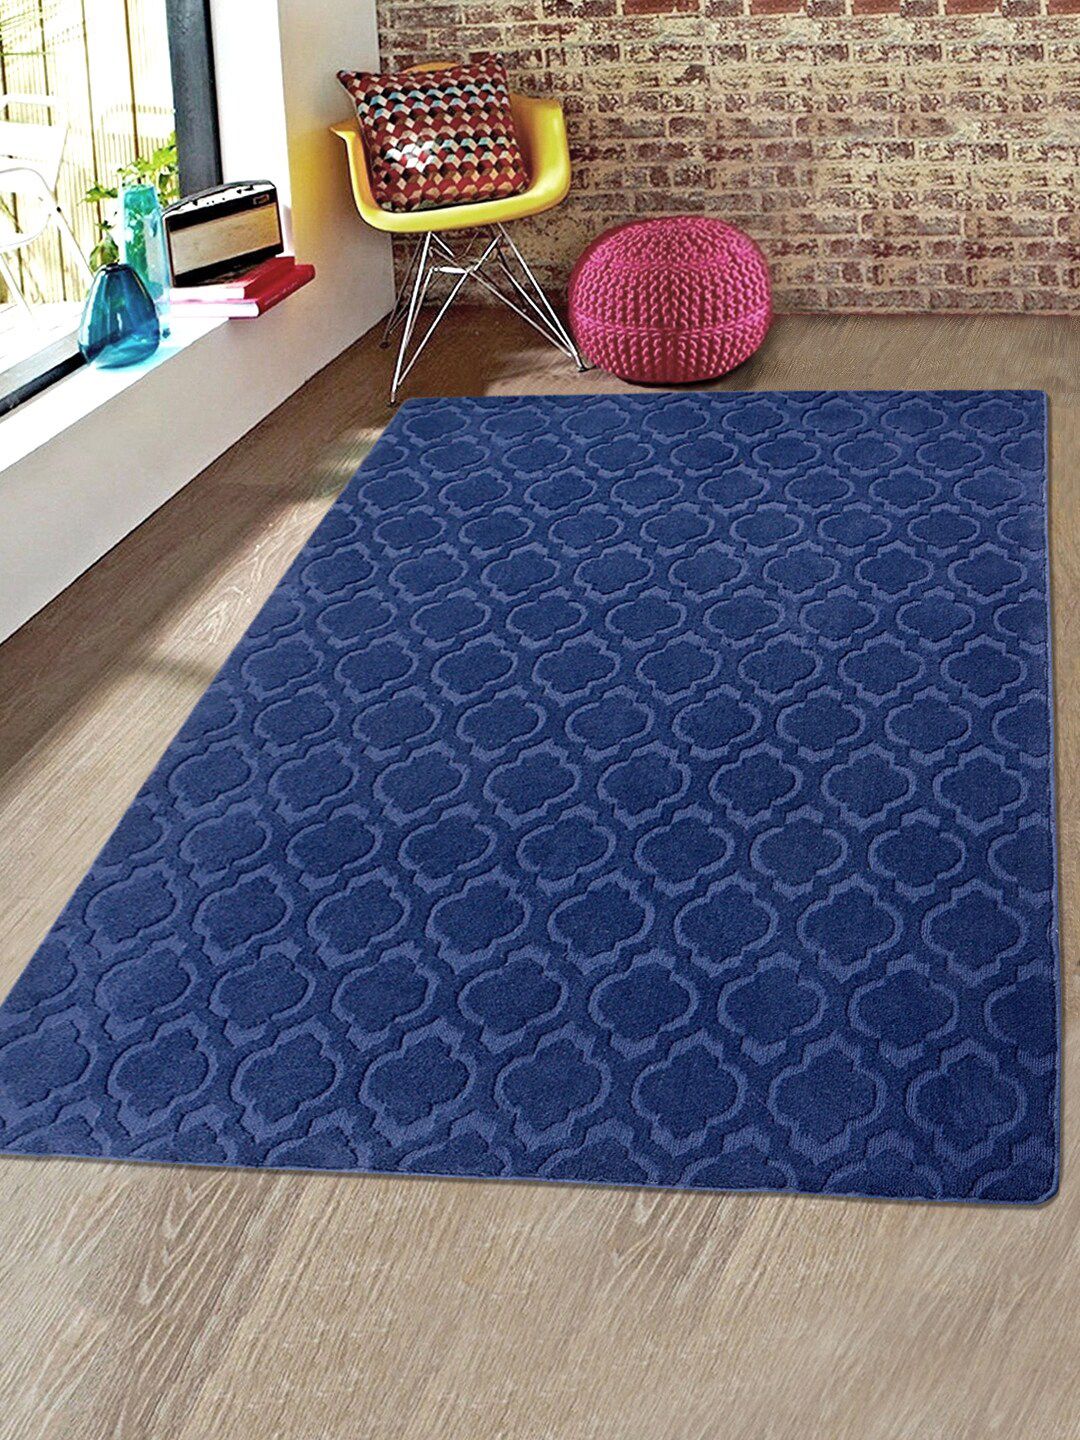 Saral Home Blue Self-Design Microfibre Anti-Skid Carpet Price in India